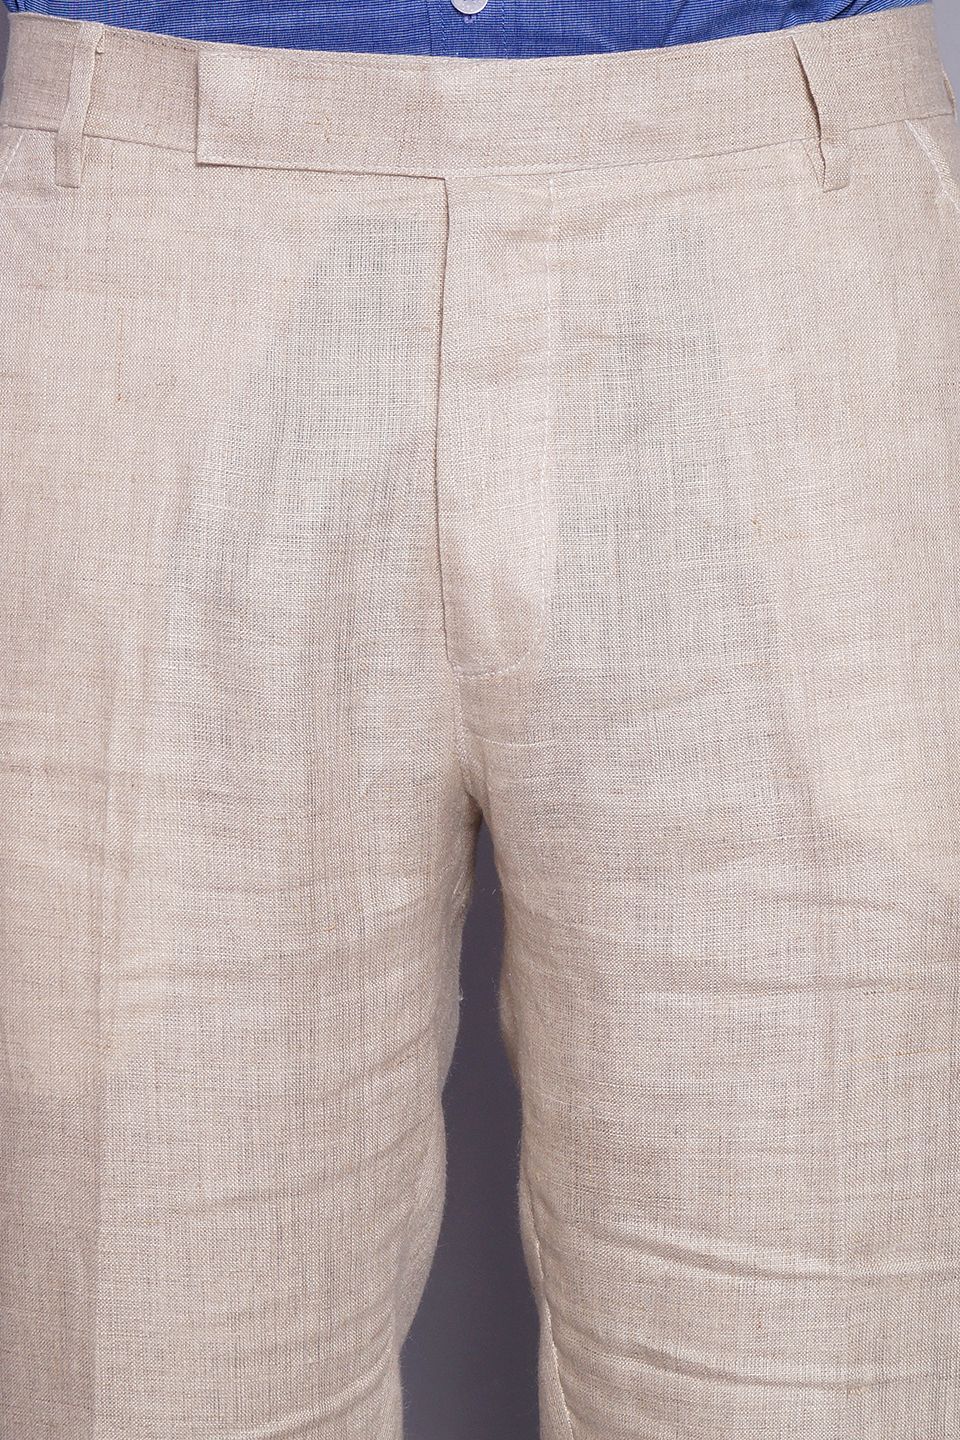 Grey Linen Trousers - Buy Grey Linen Trousers online in India